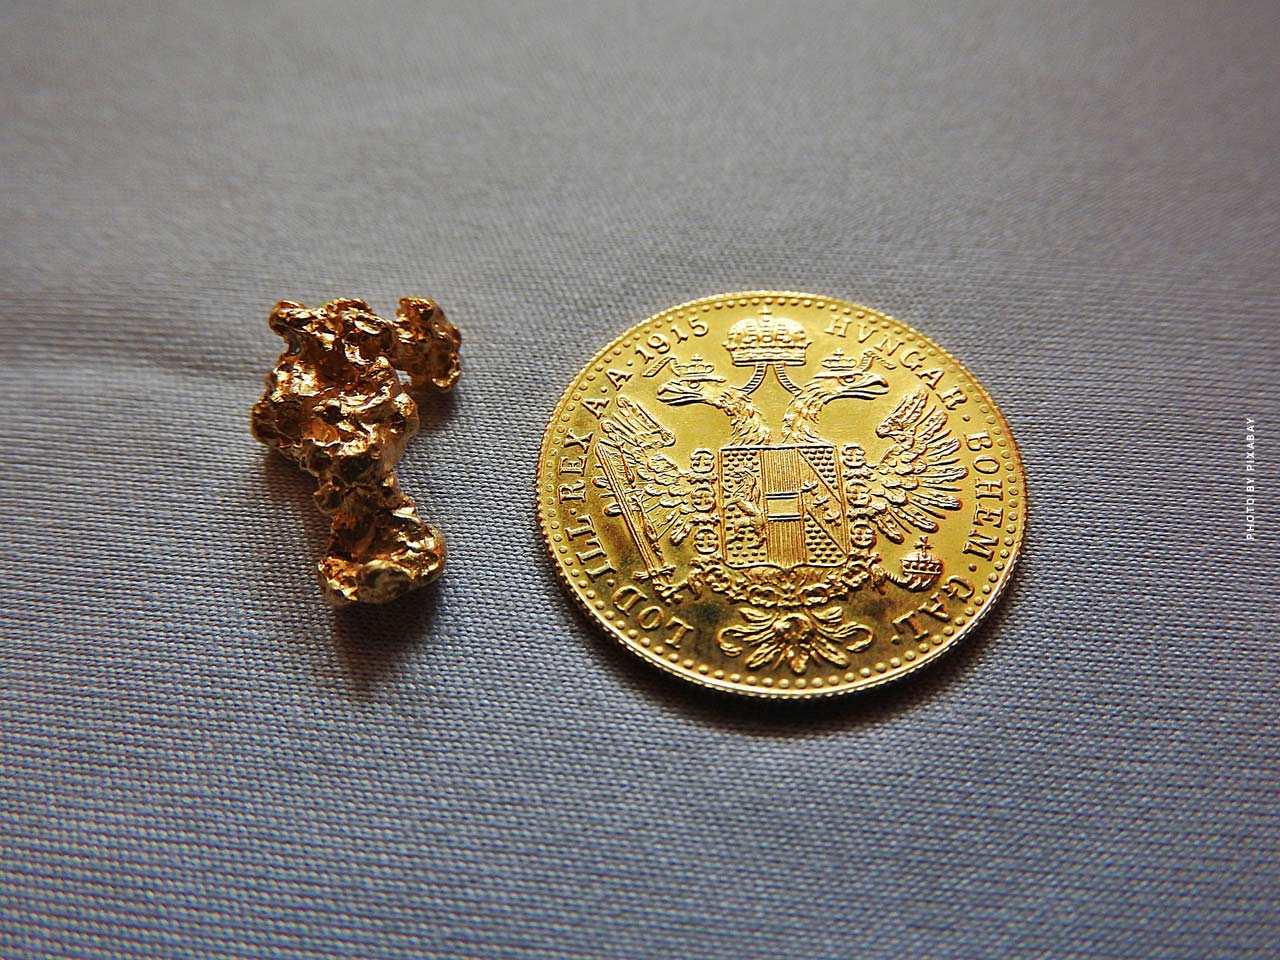 golddukat-gold-nugget-vergleich-gewicht-groesse-aussehen-rohmaterial-muenze-wertvoll-teuer